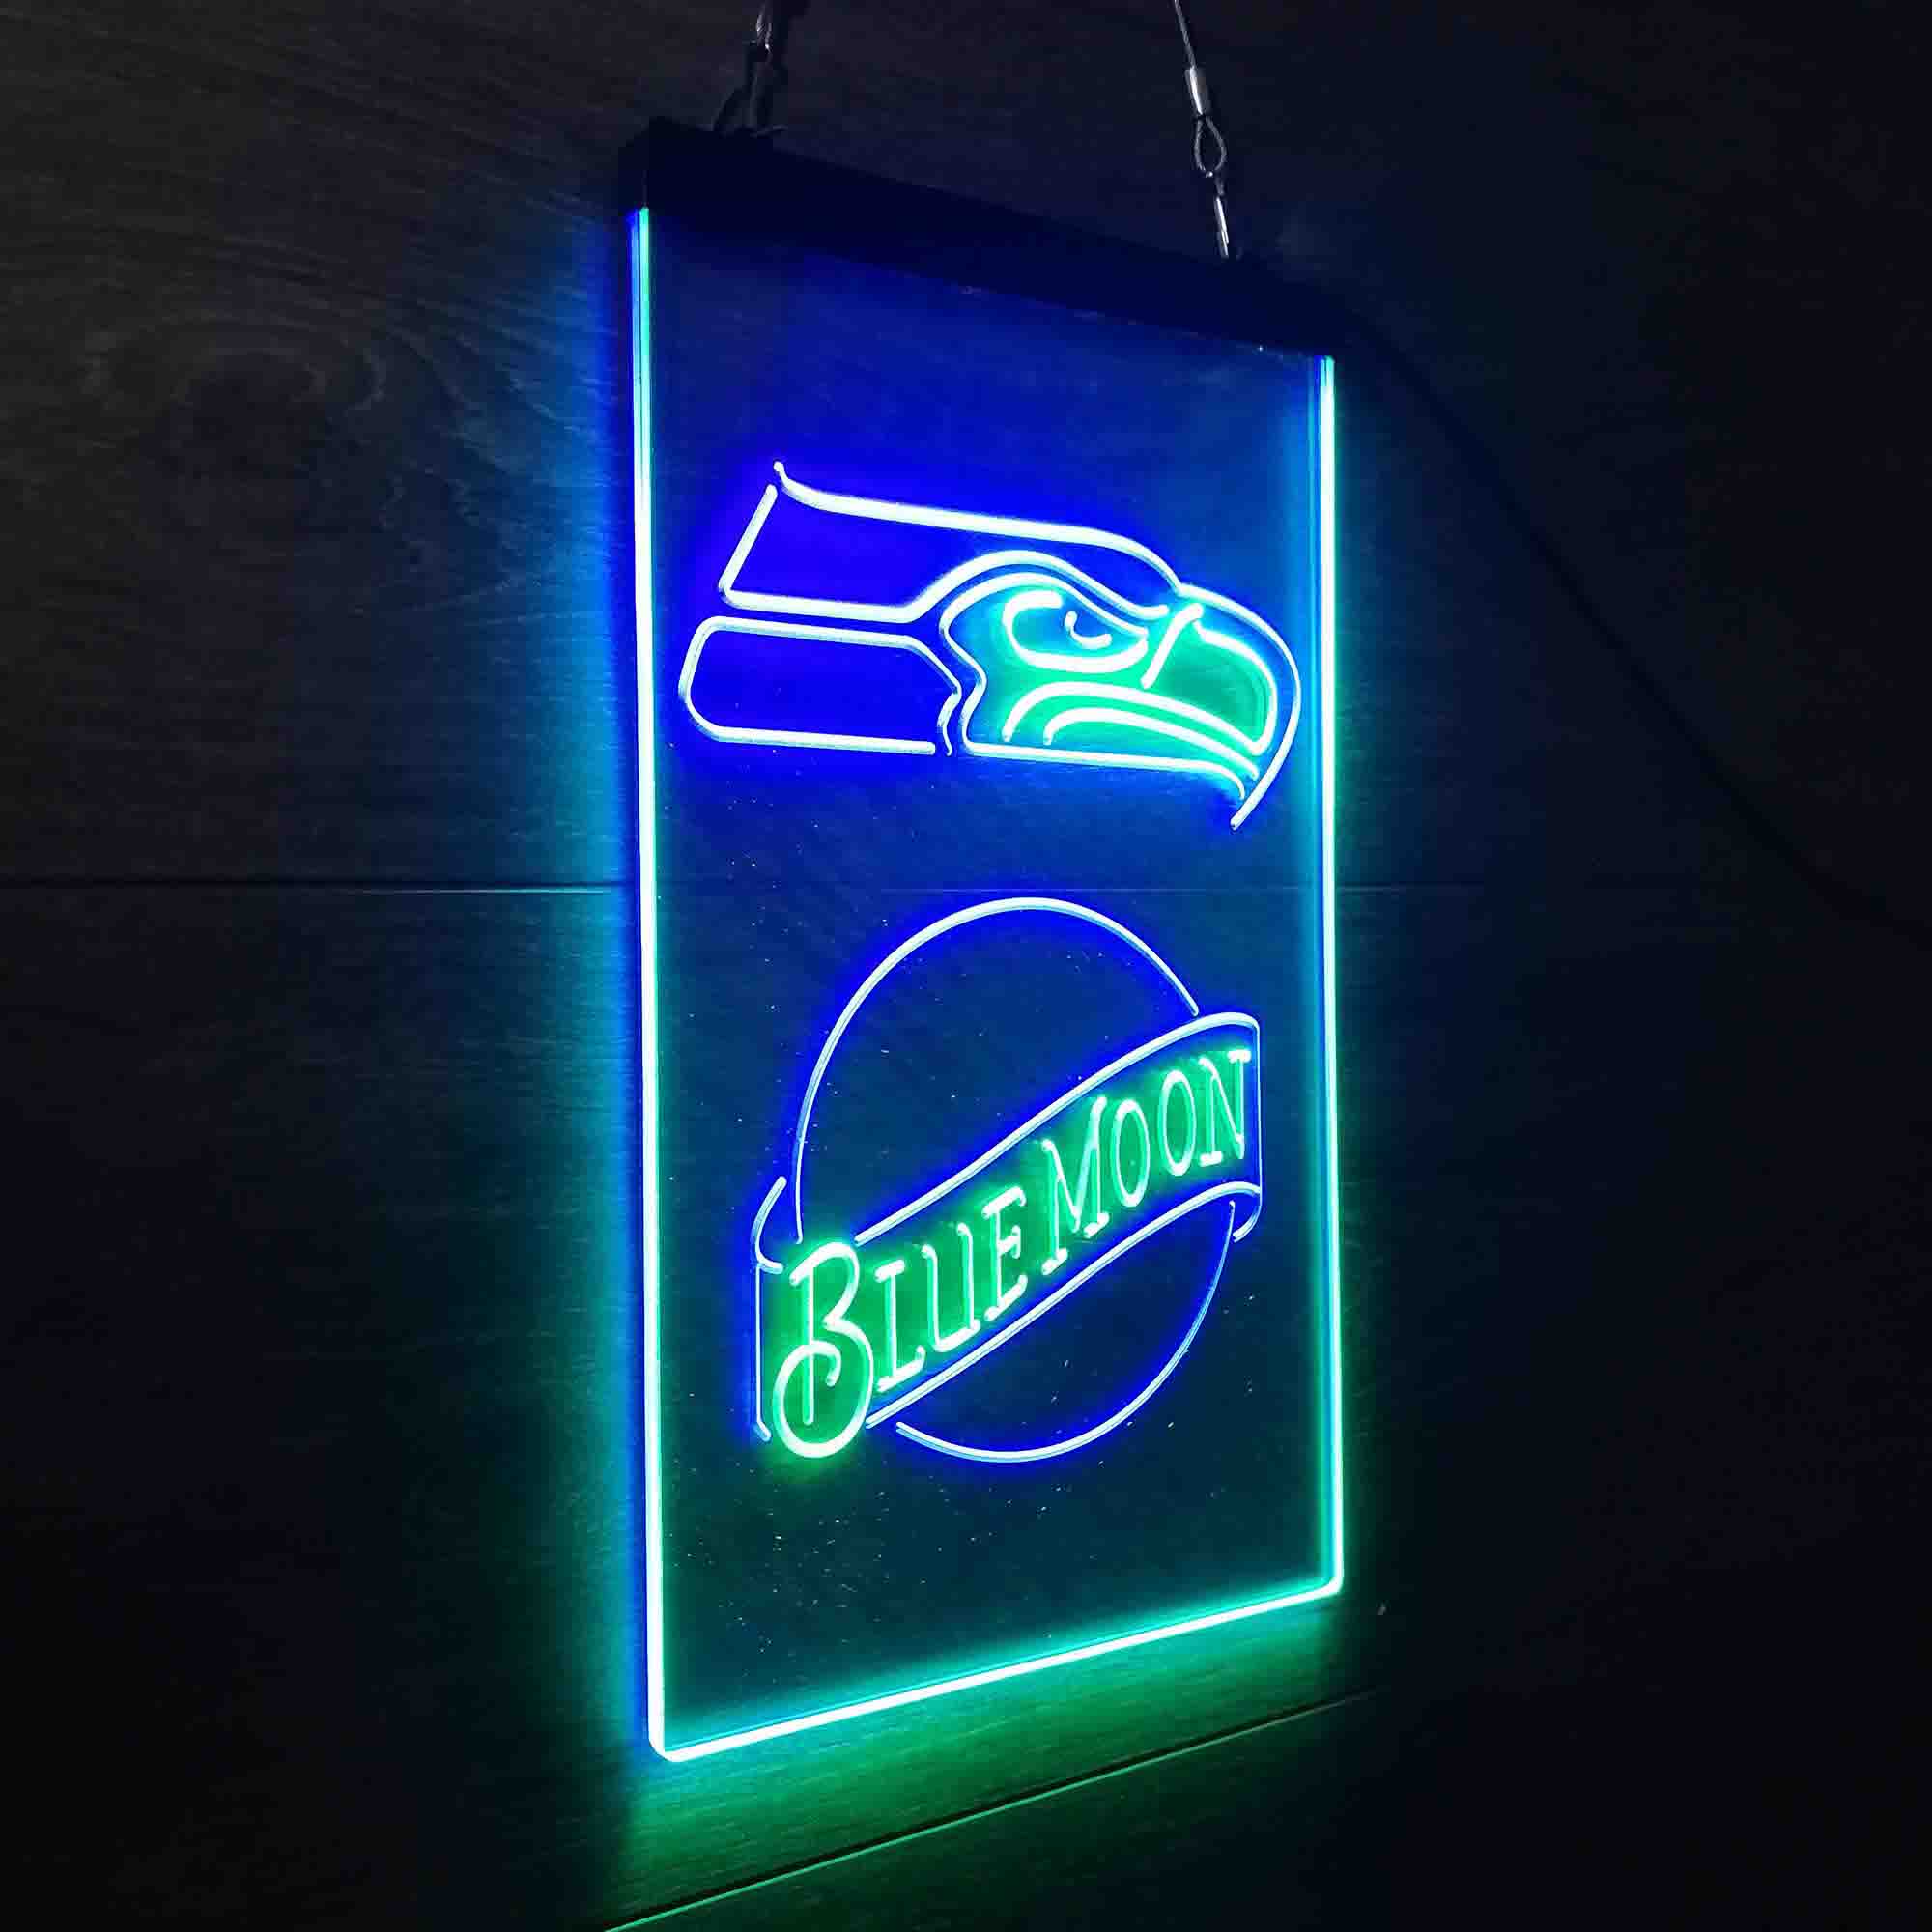 Blue Moon Bar Seattle Seahawks Est. 1976 LED Neon Sign